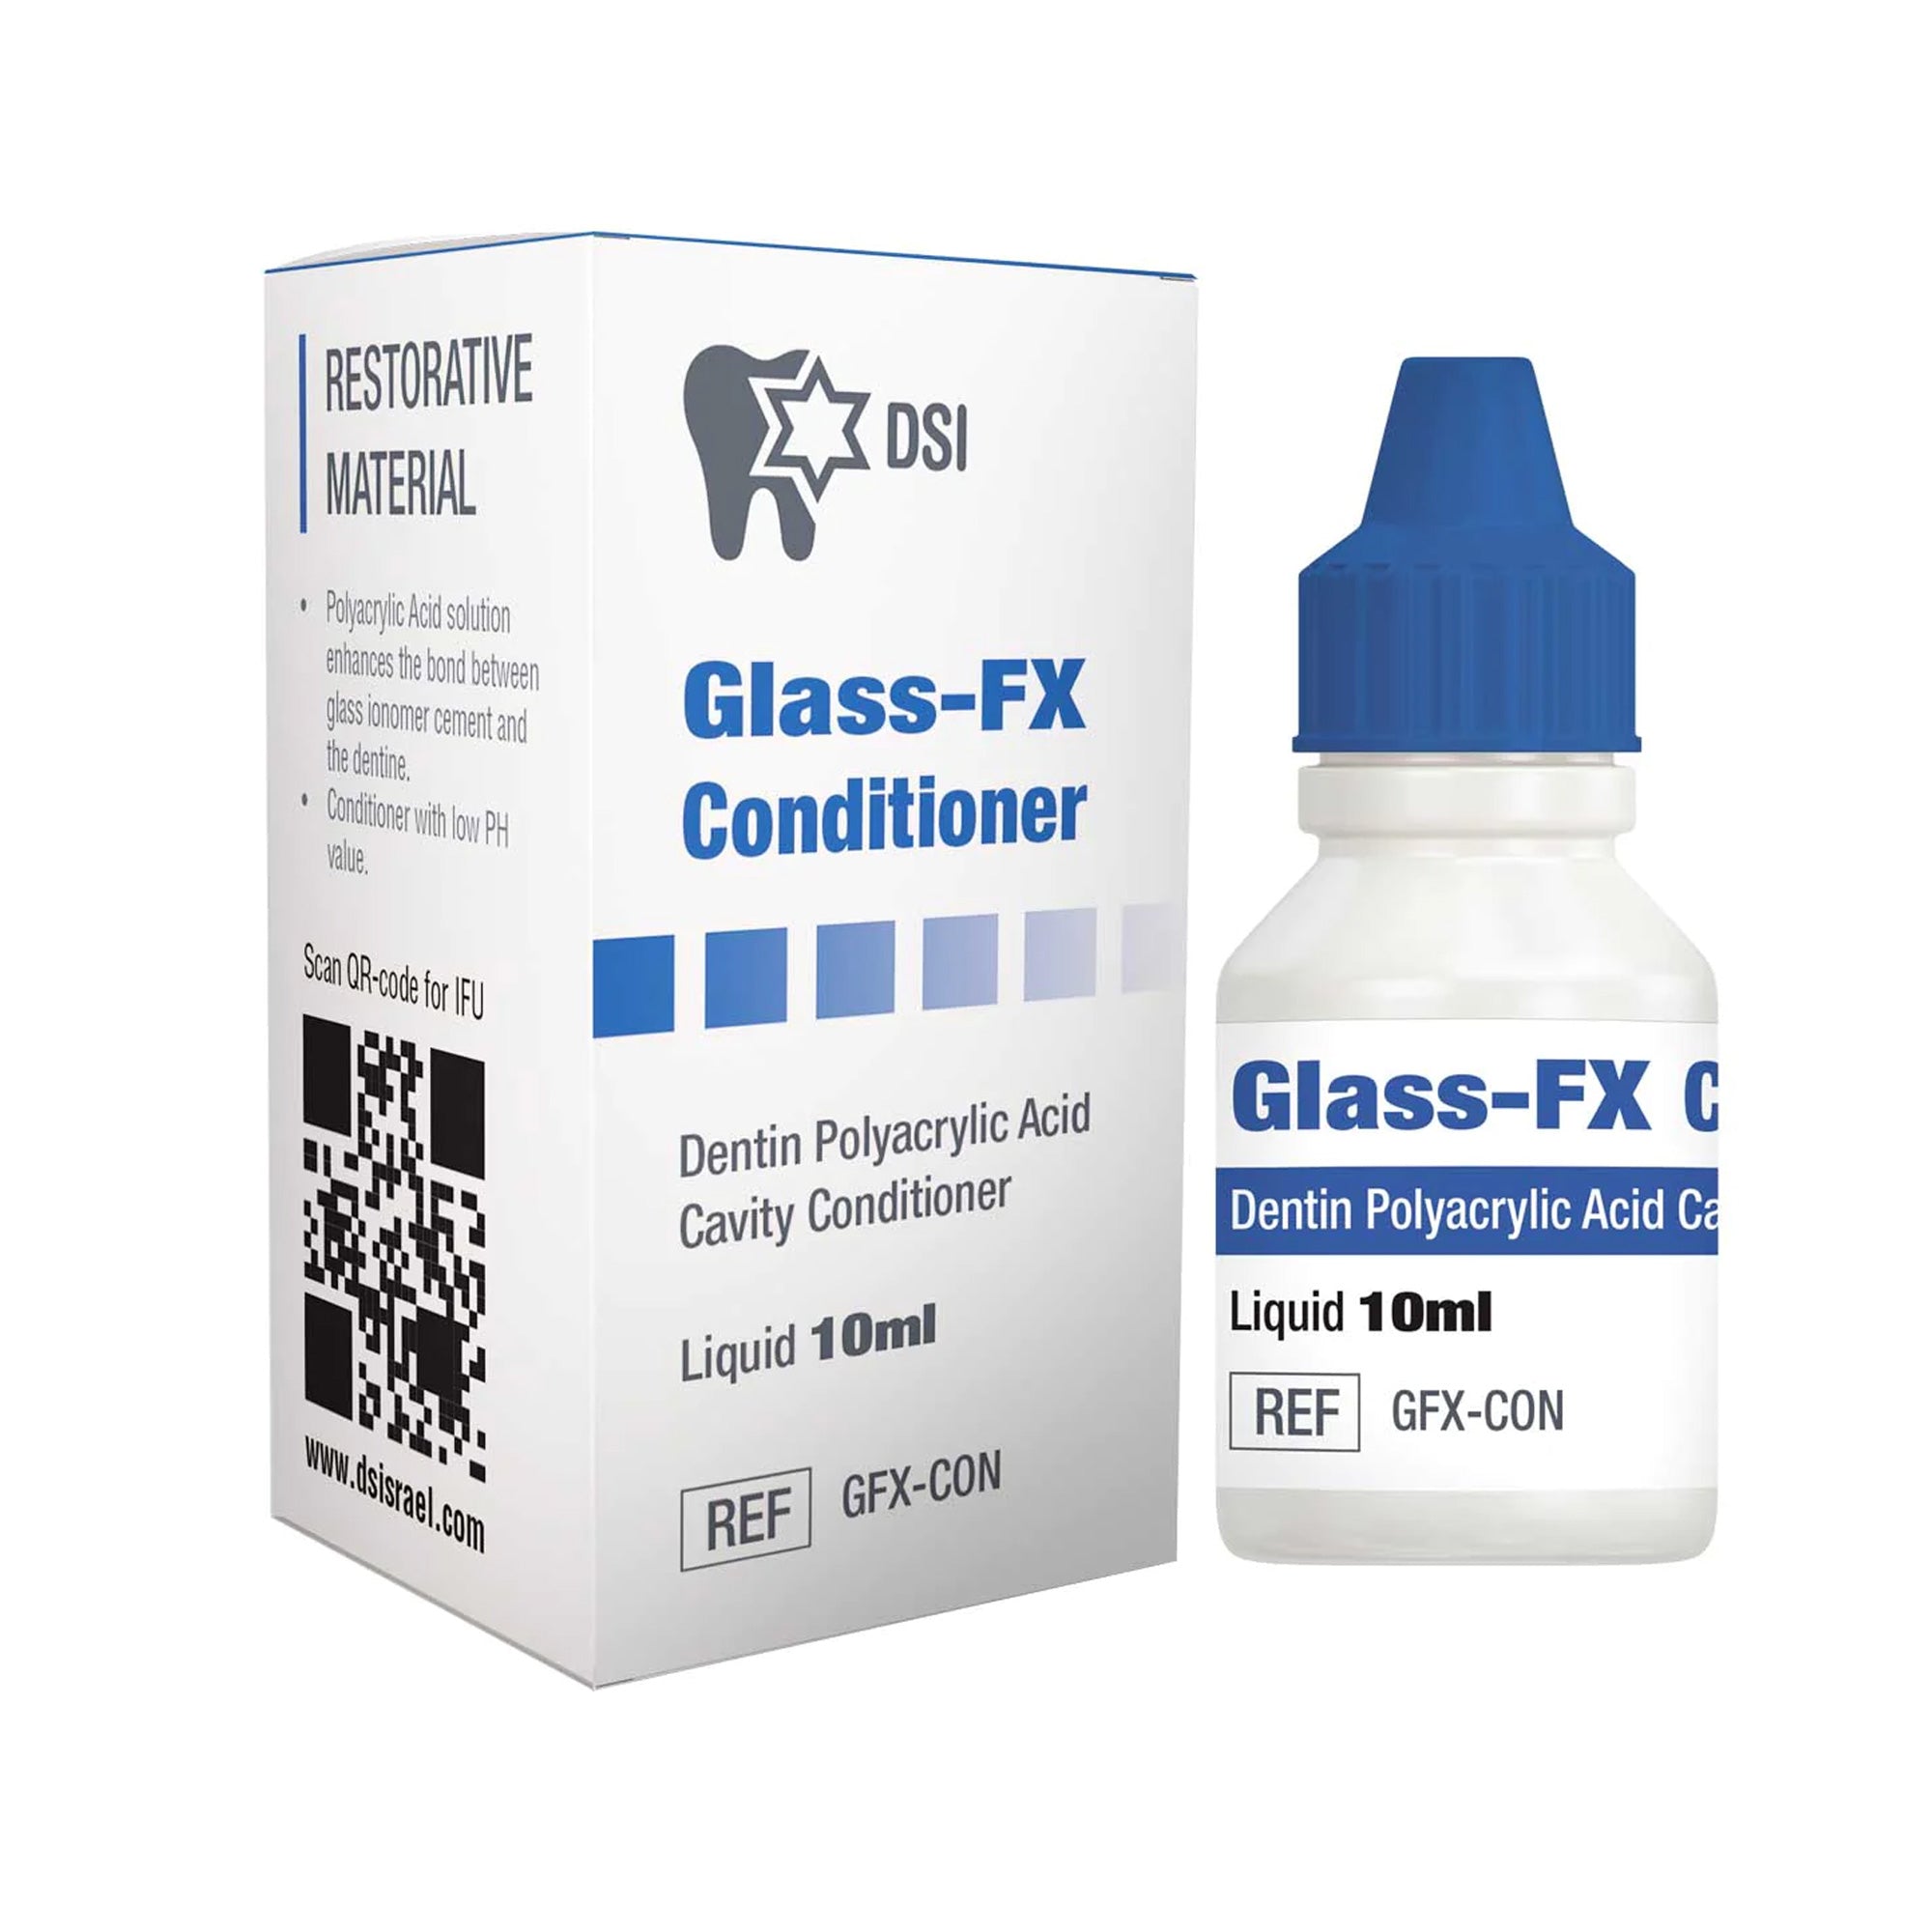 DSI Glass-FX Conditioner  Dentin Polyacrylic Acid Cavity Conditioner 10ml